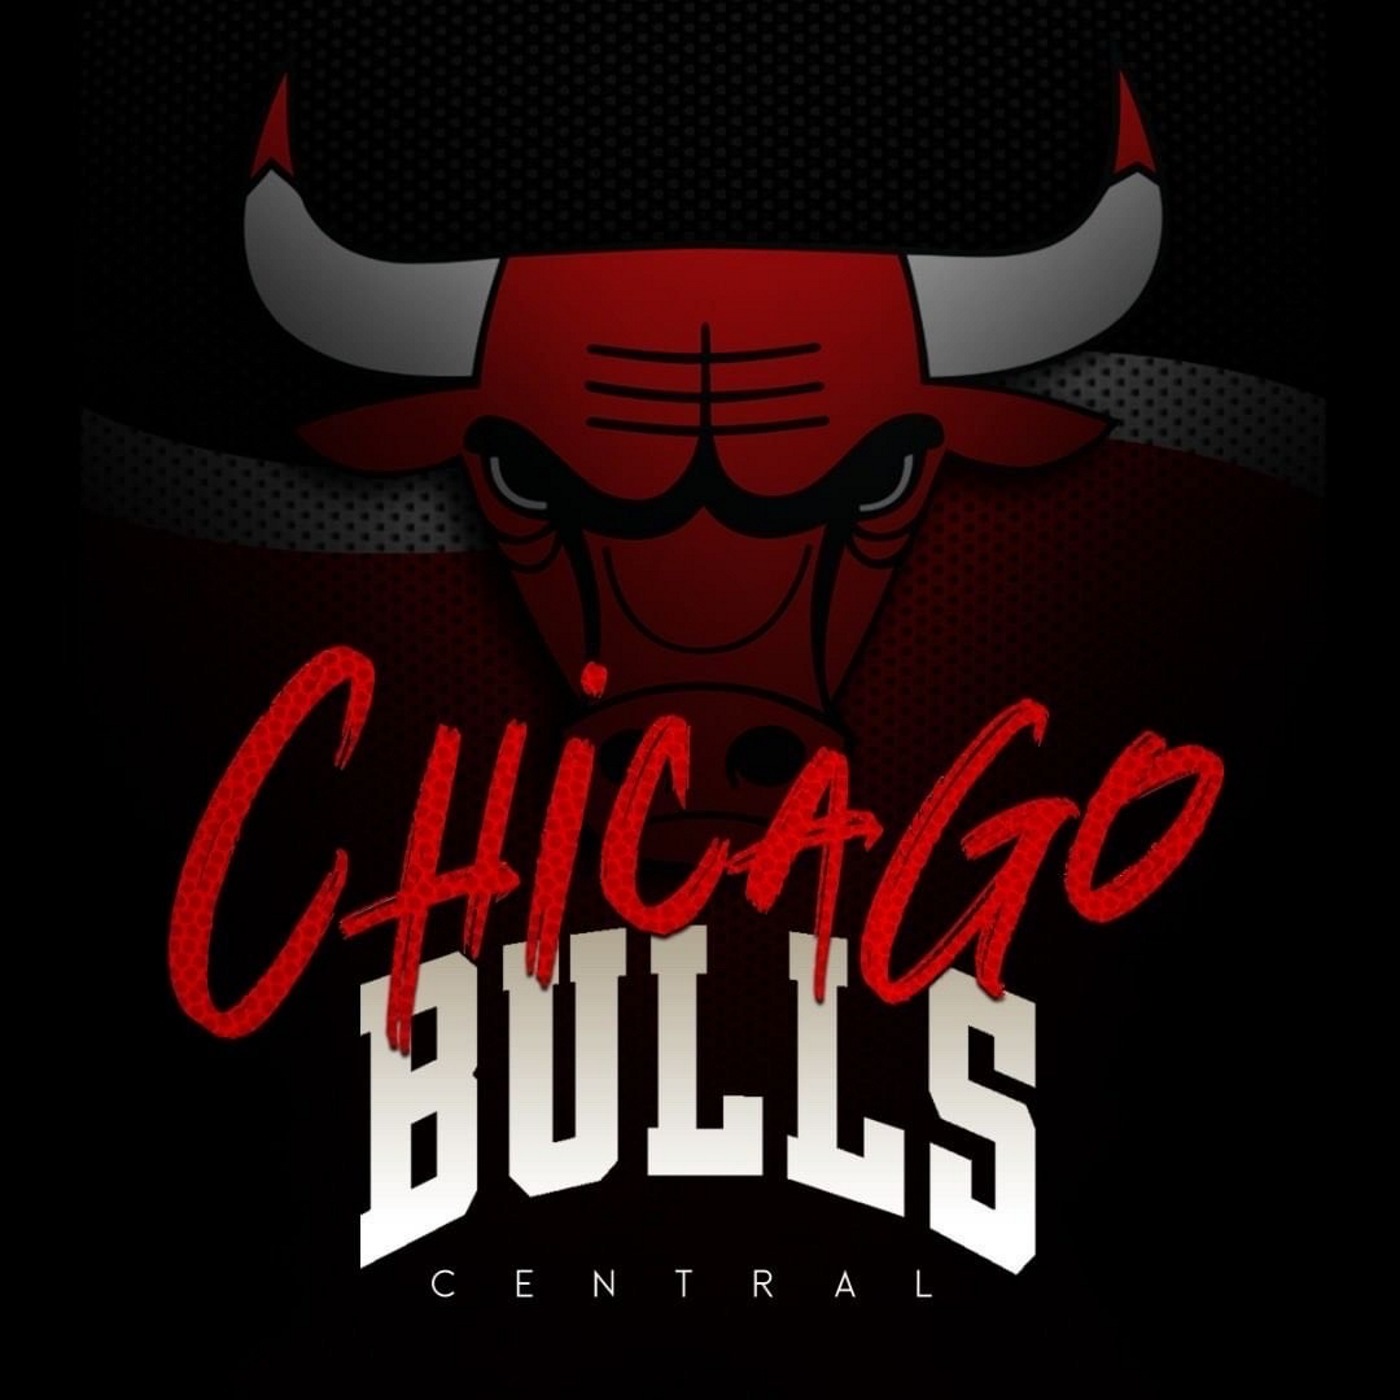 Chicago Bulls Central podcast